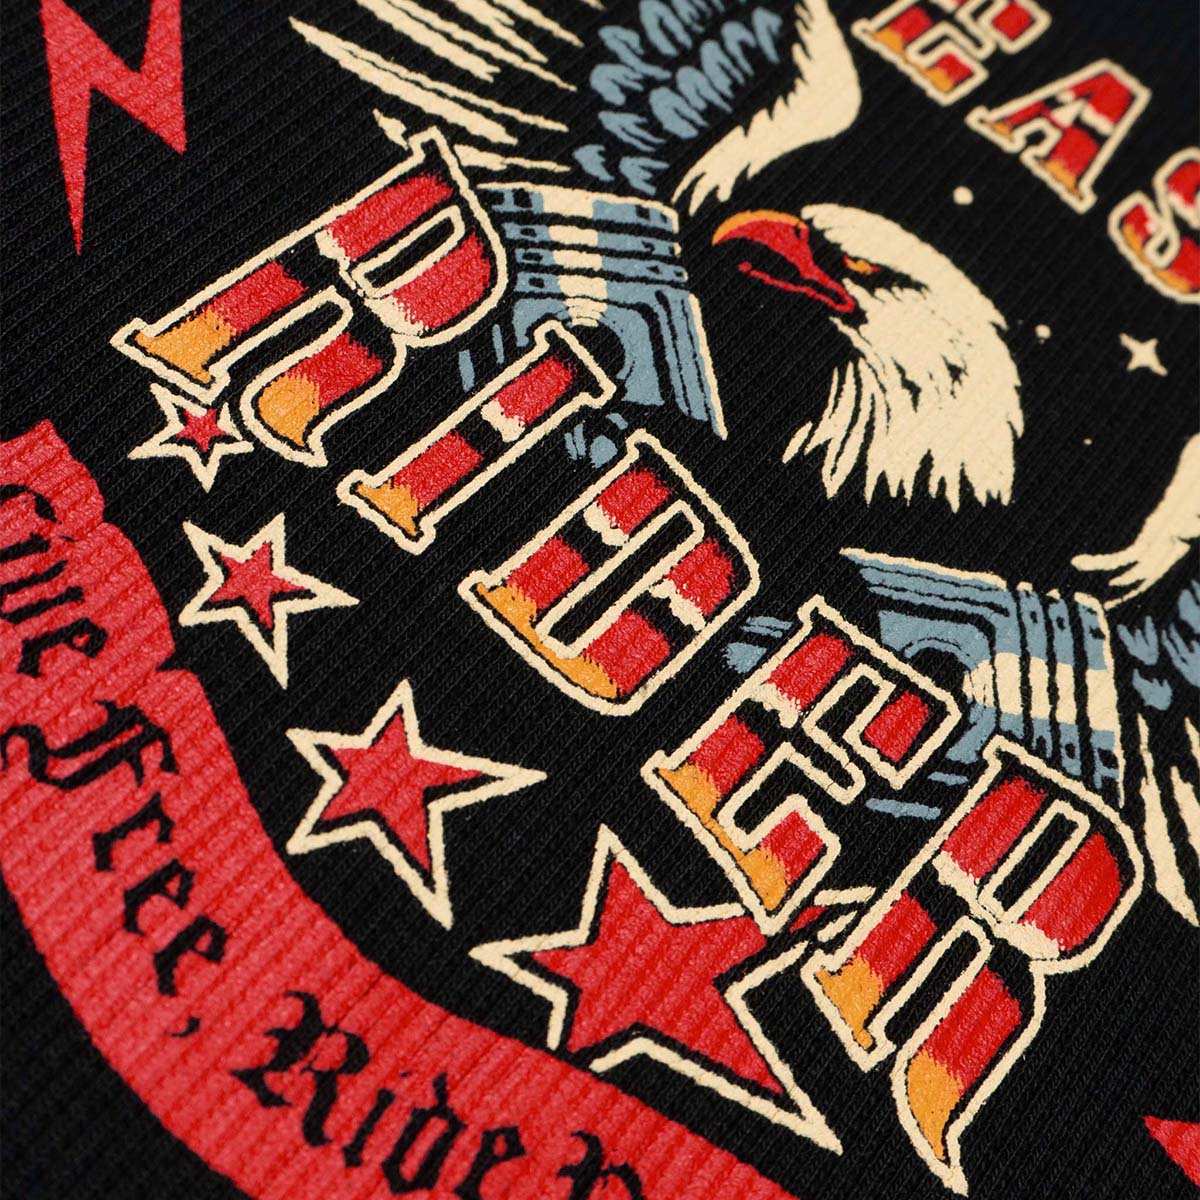 Up close of a Sleazy Rider biker eagle screen print